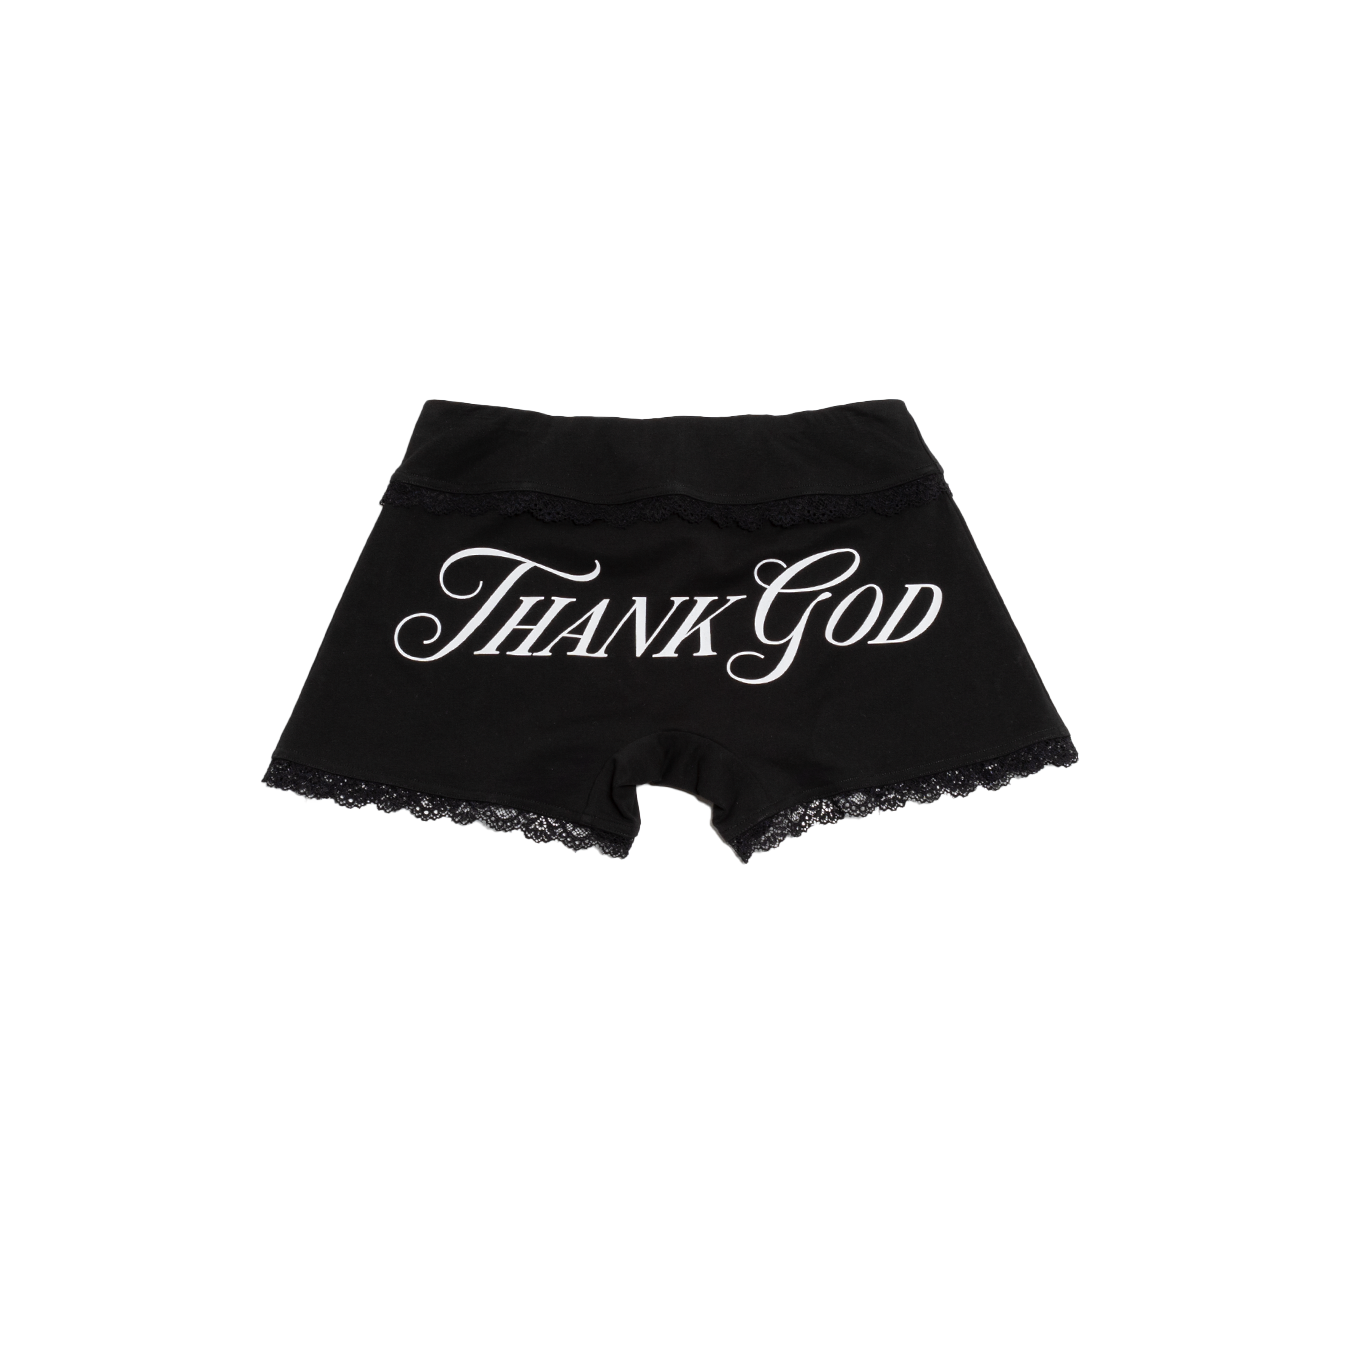 Prngrphy – Black "Thank God" Lace Trim Mini Shorts